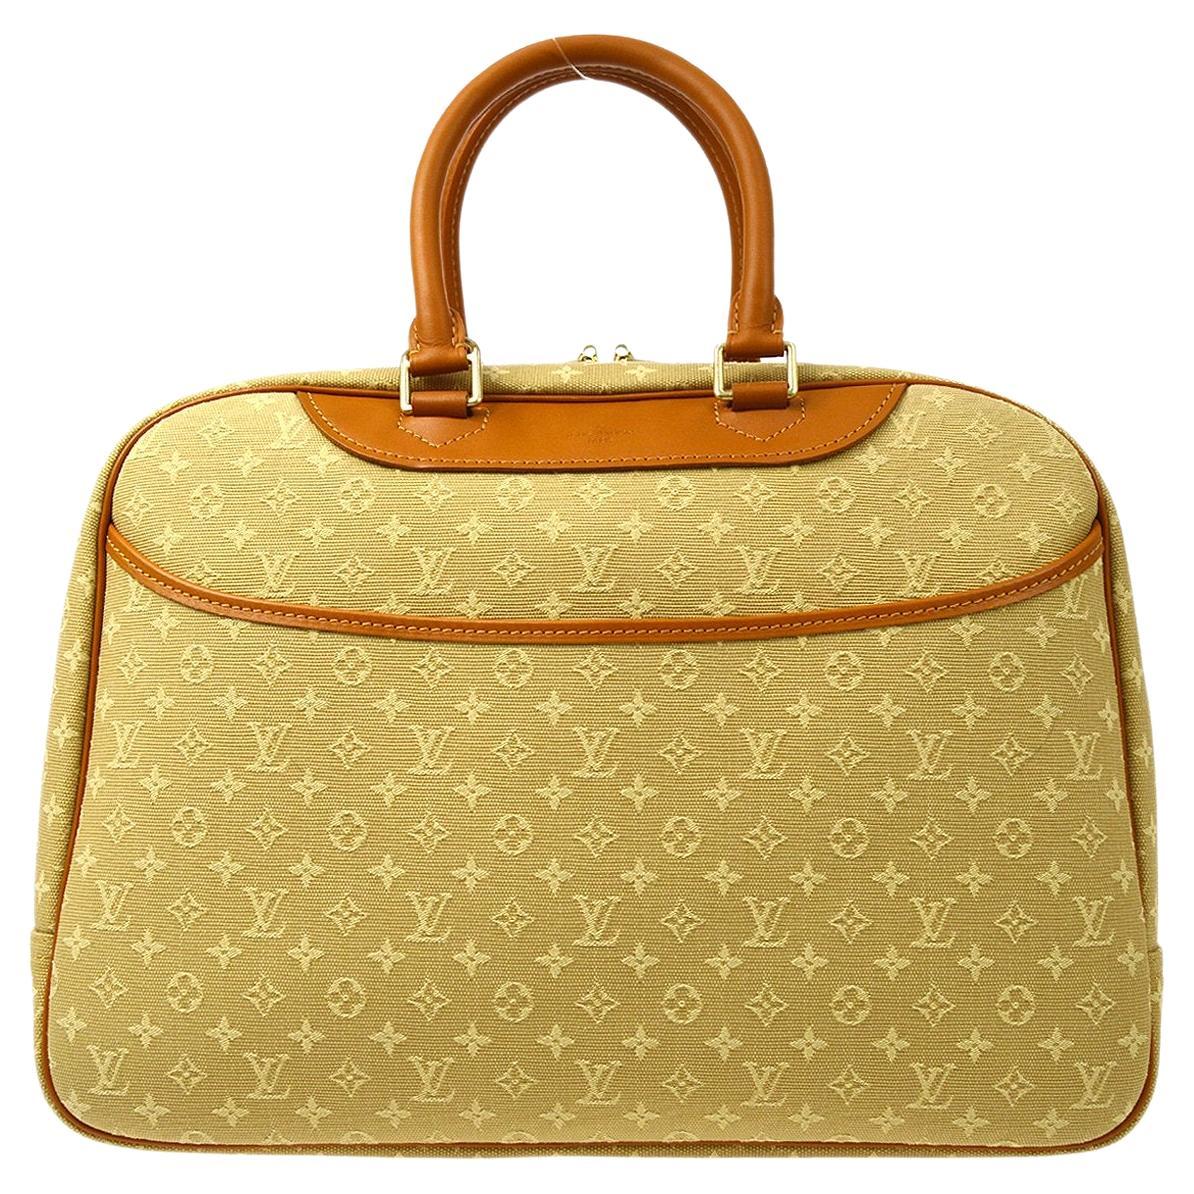 LOUIS VUITTON Special Order Beige Monogram Canvas Travel Carryon Top Handle Bag